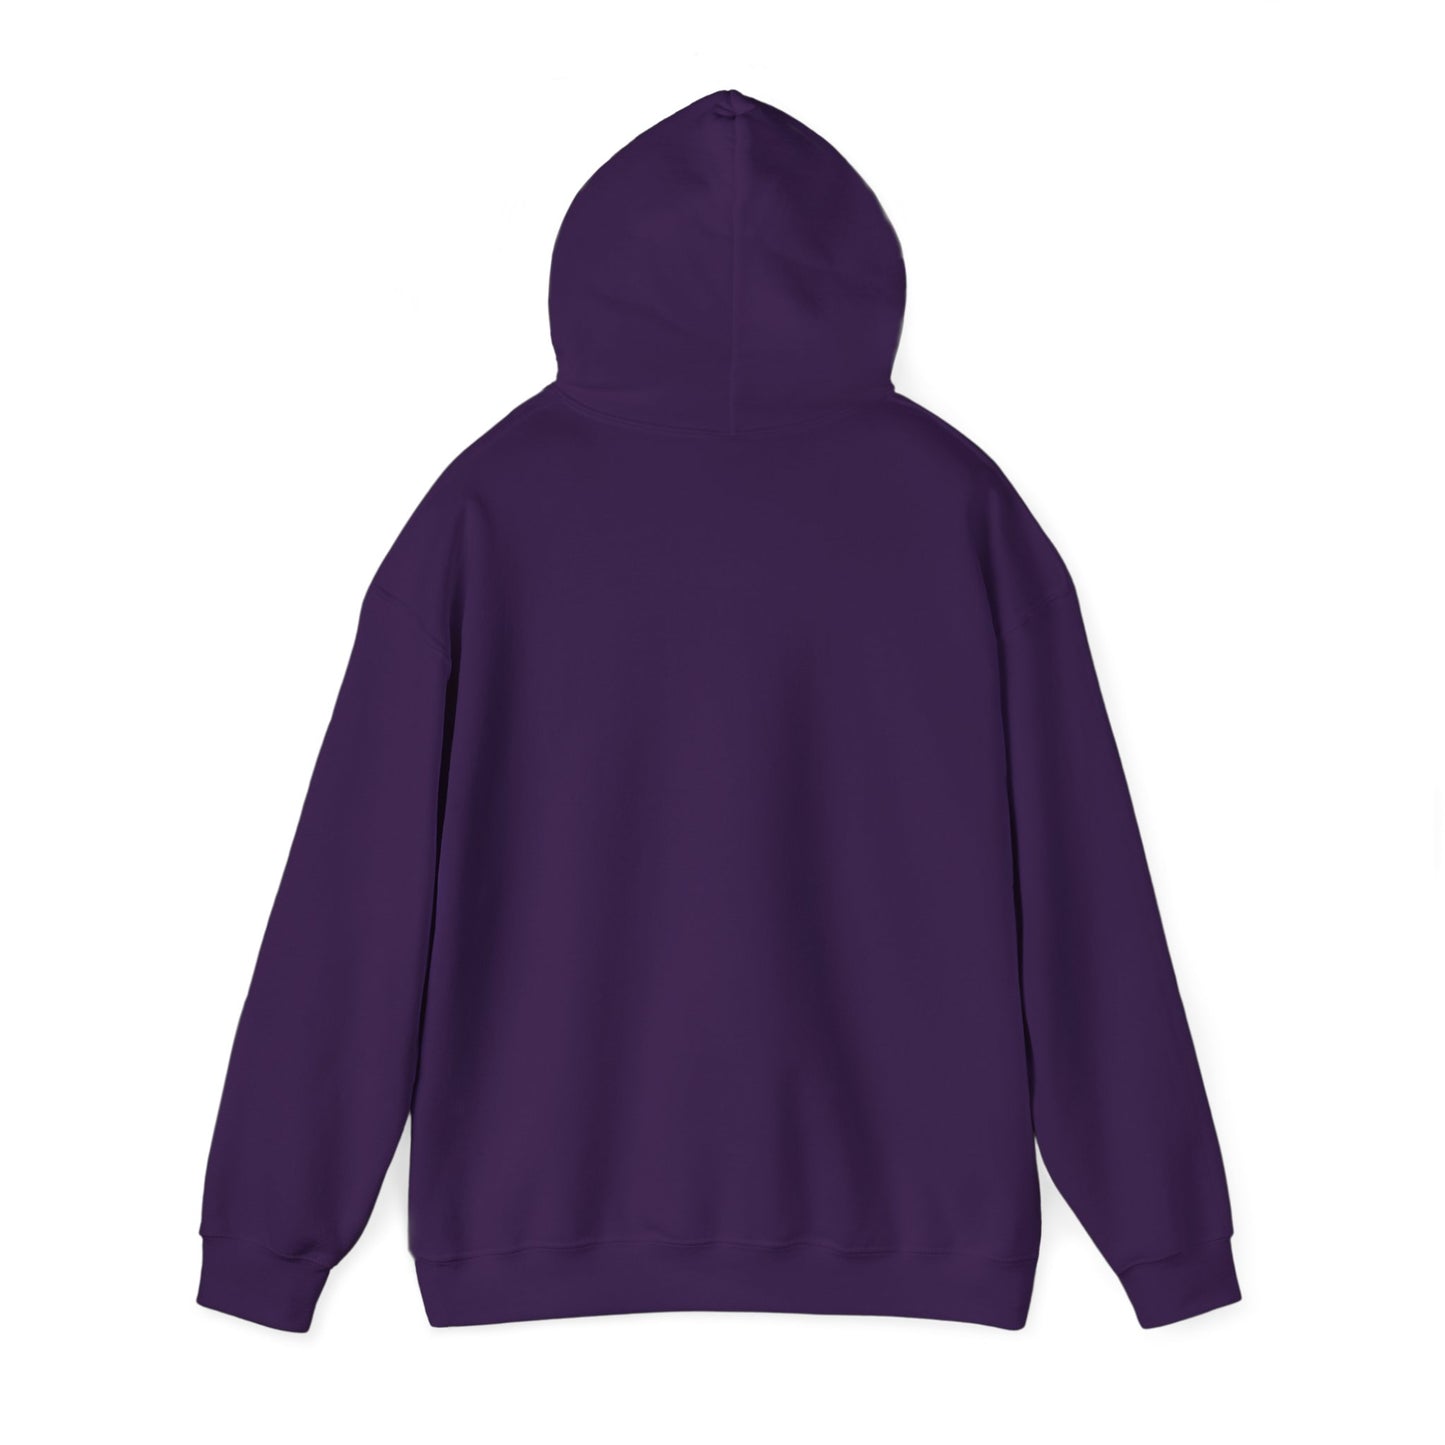 I ♥ Hot Moms" Unisex Heavy Blend™ Hooded Sweatshirt